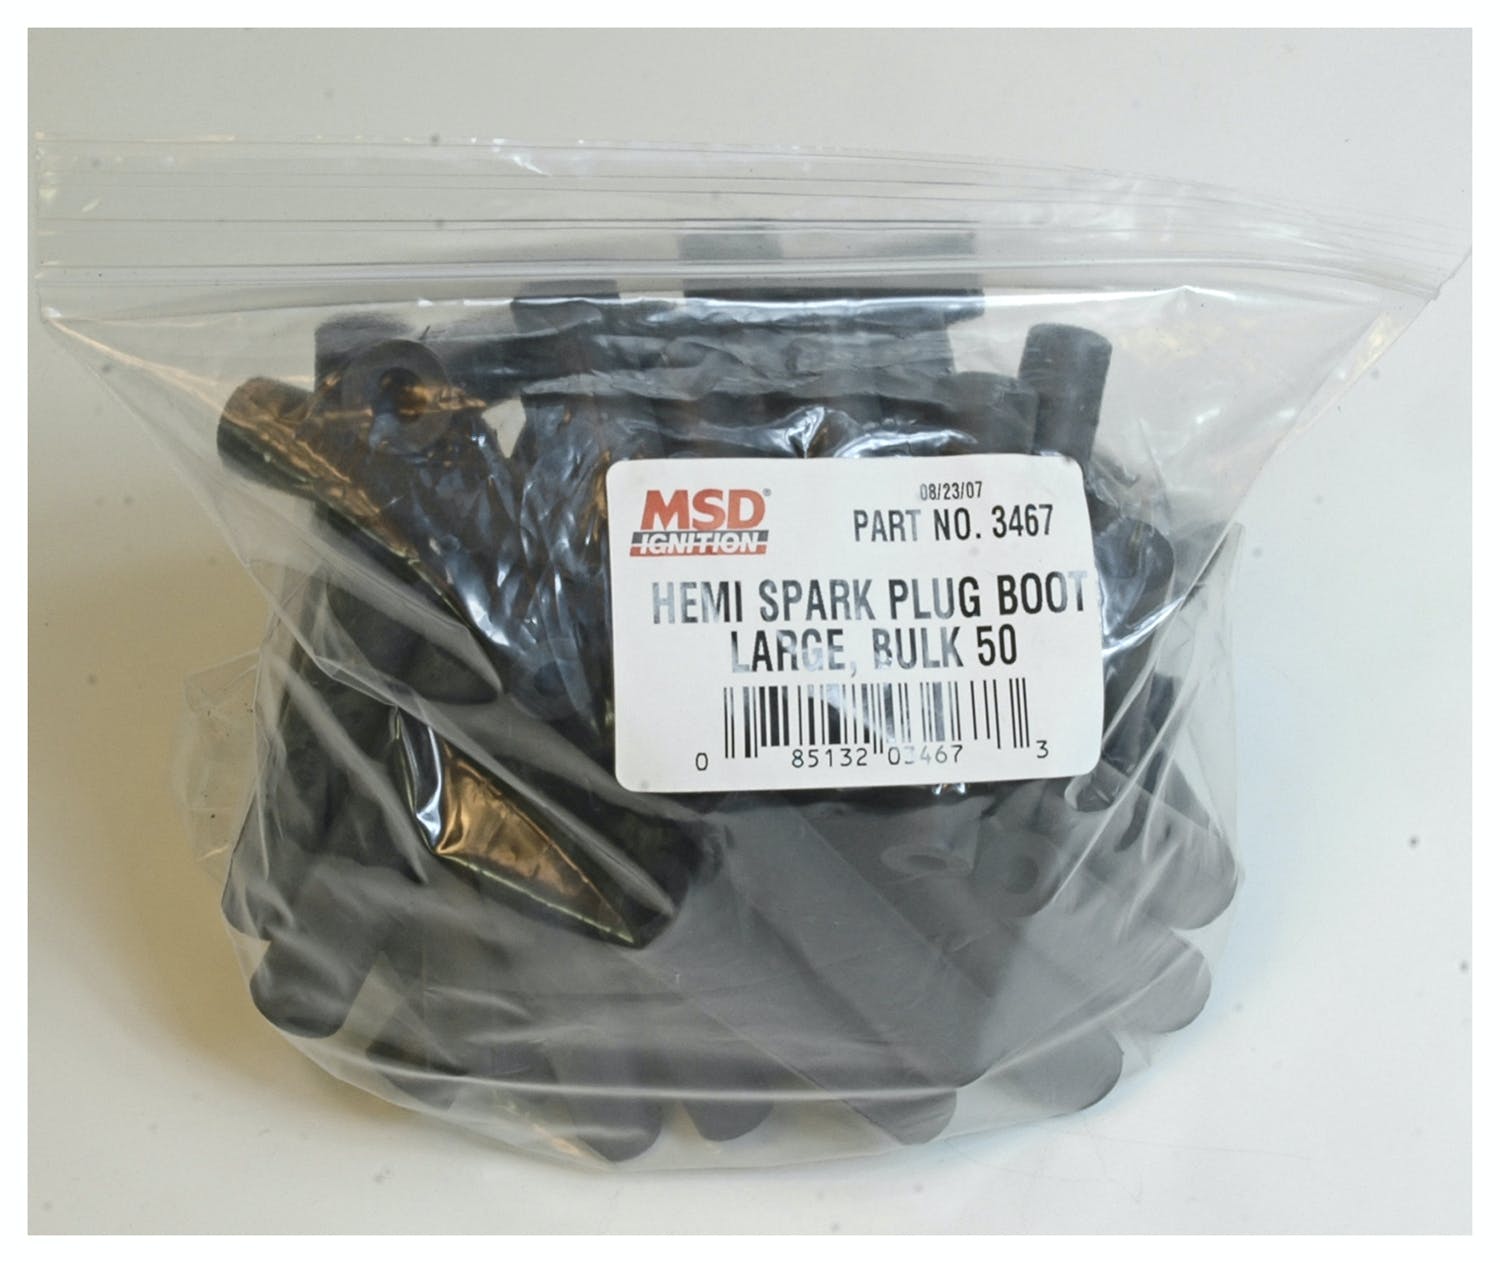 MSD Performance 3467 Hemi Spark Plug Boot, Large, Bulk 50